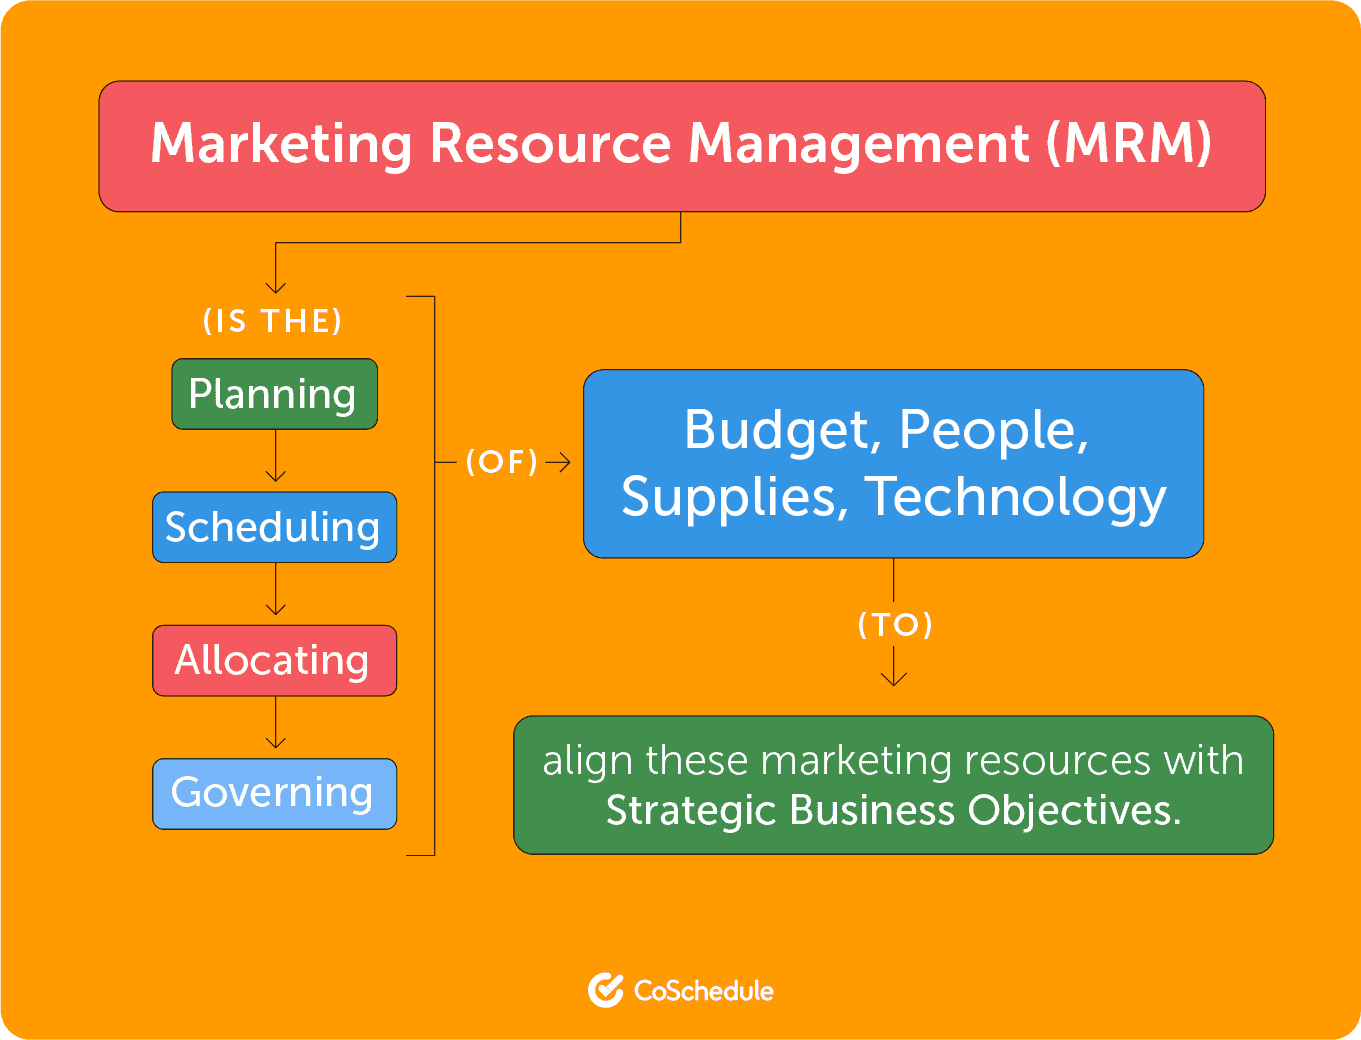 Marketing Resource management steps